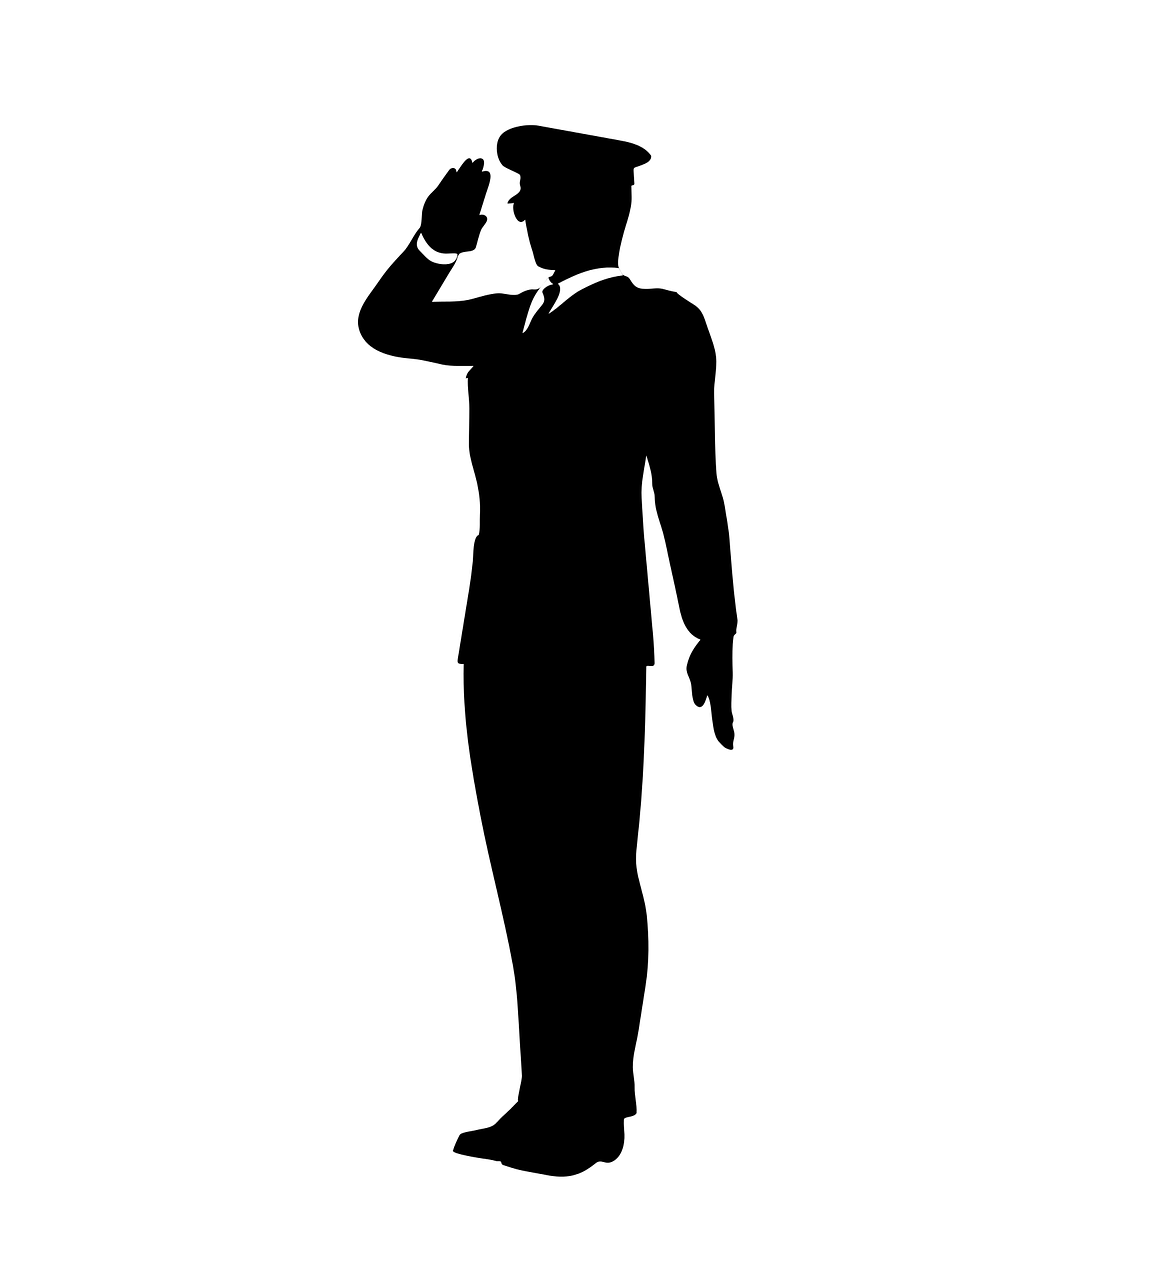 a silhouette of a man in a uniform saluting, 2d side view, ceremonial, modern, uniform